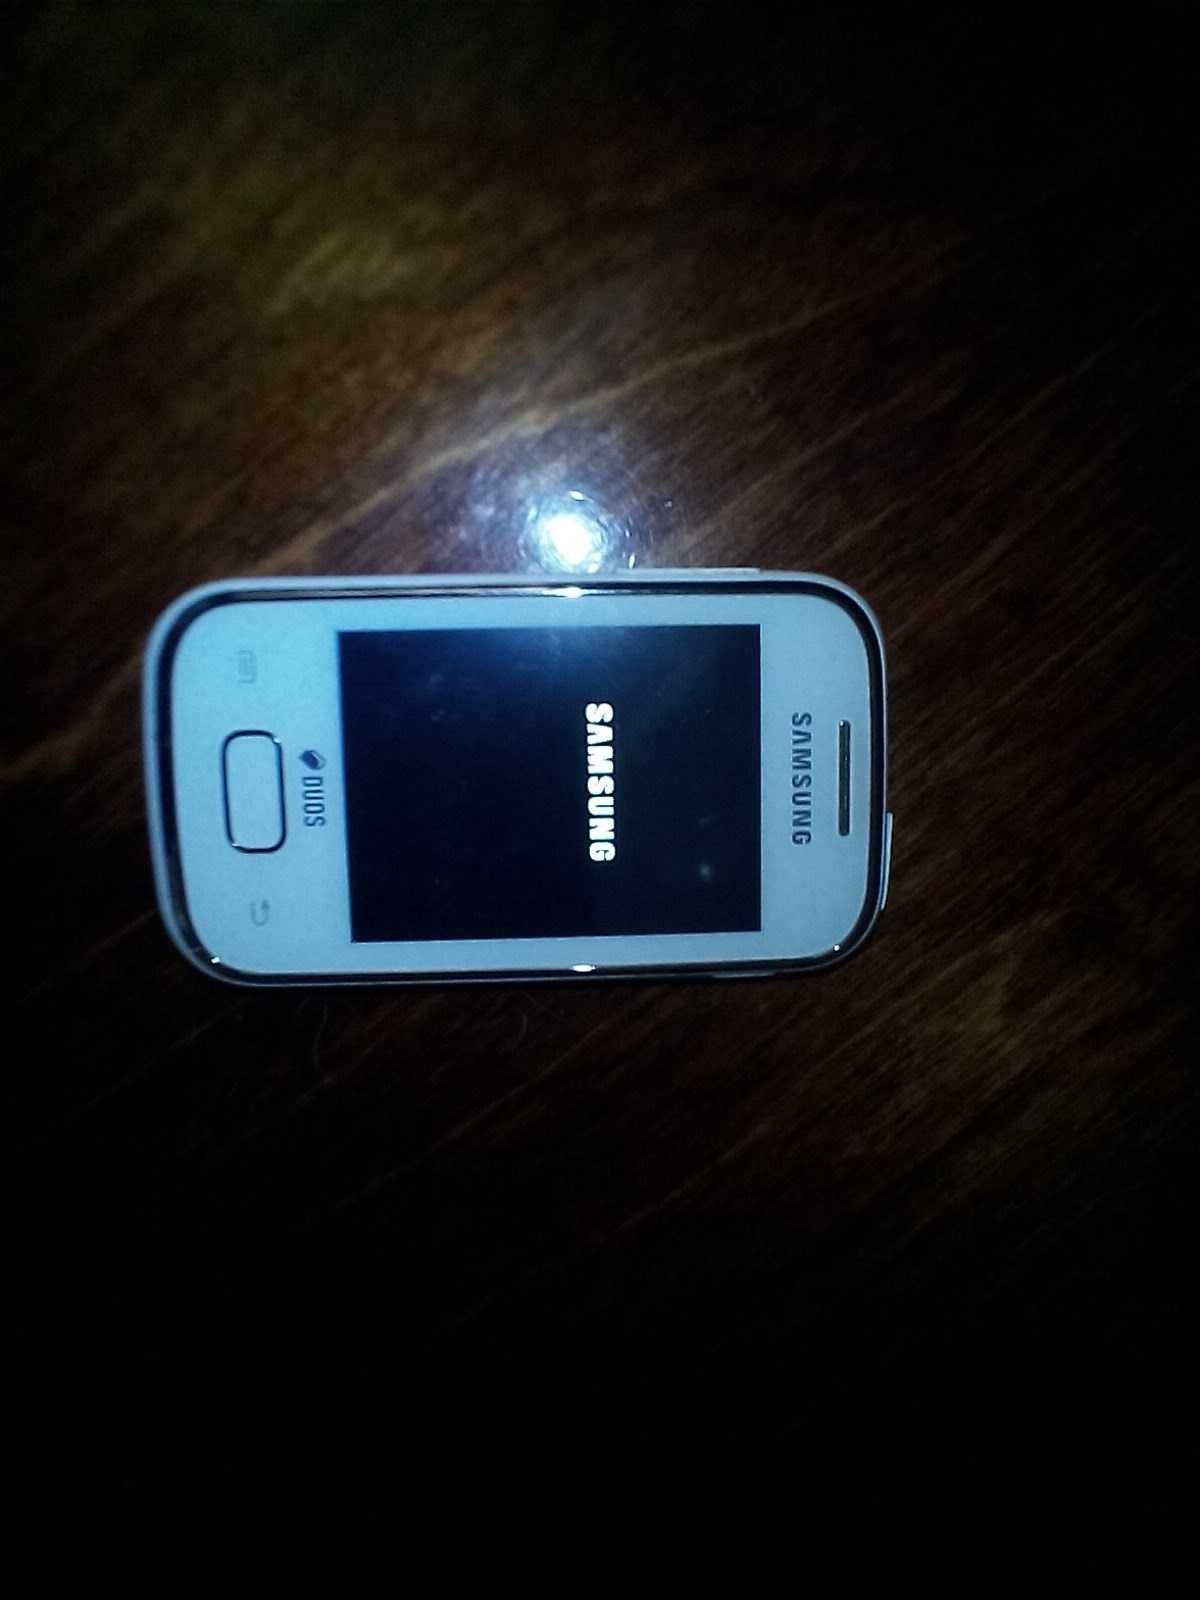 Samsung GALAXY Pocket